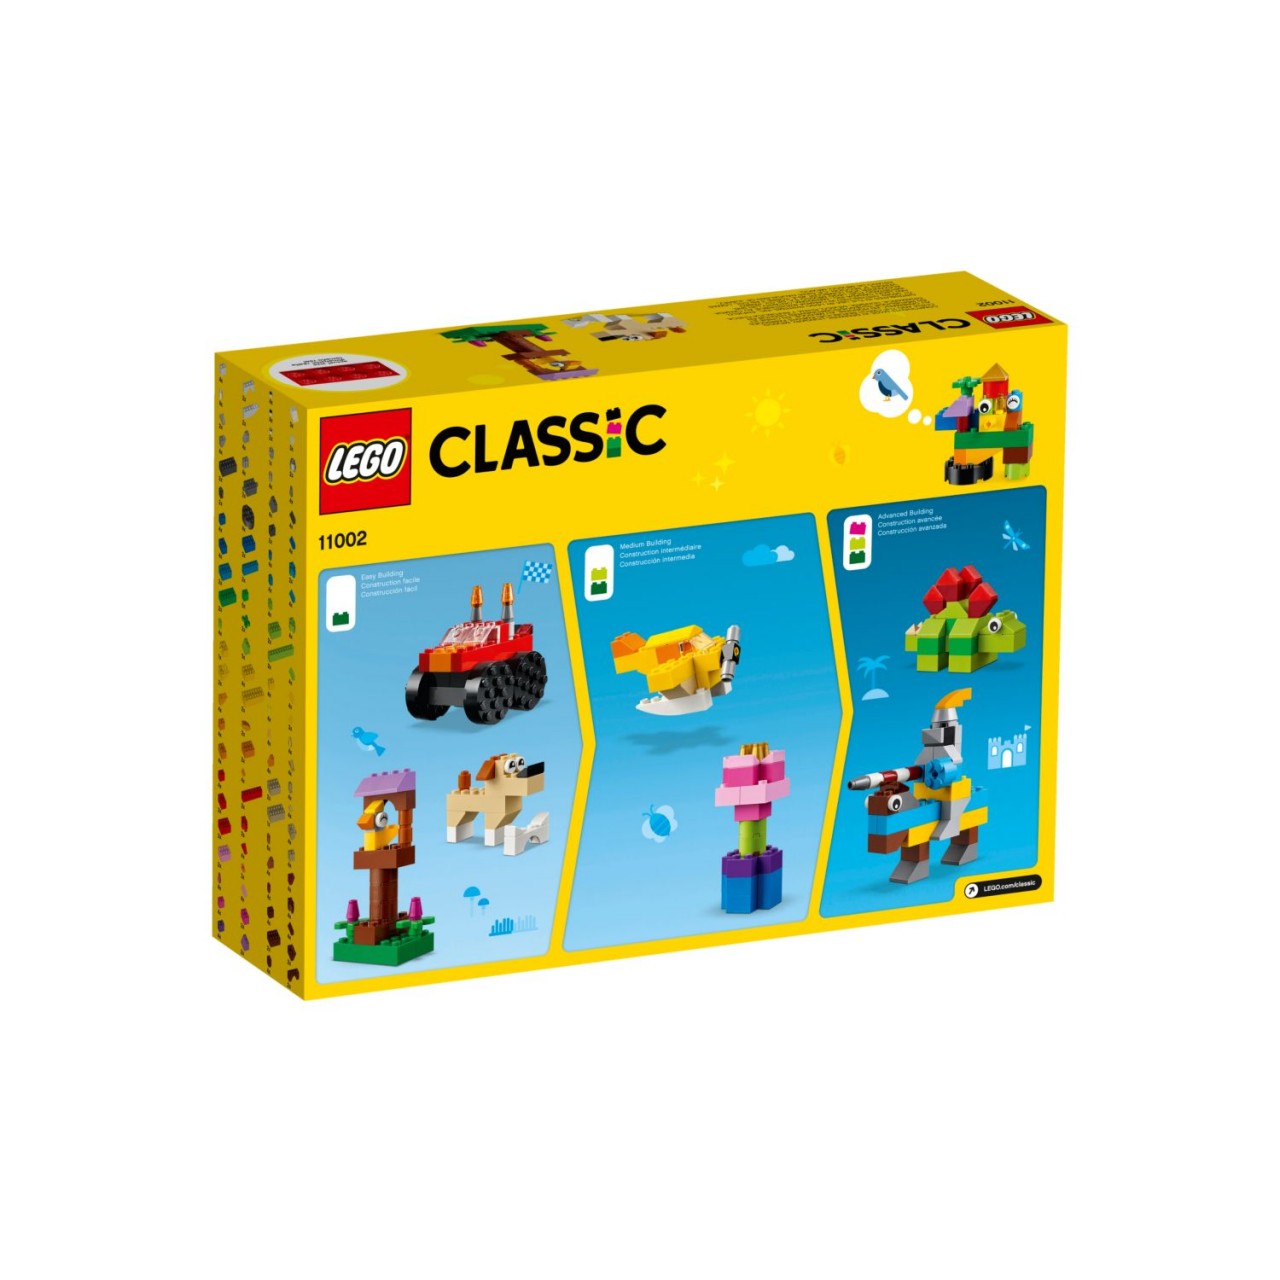 LEGO CLASSIC 11002 Bausteine